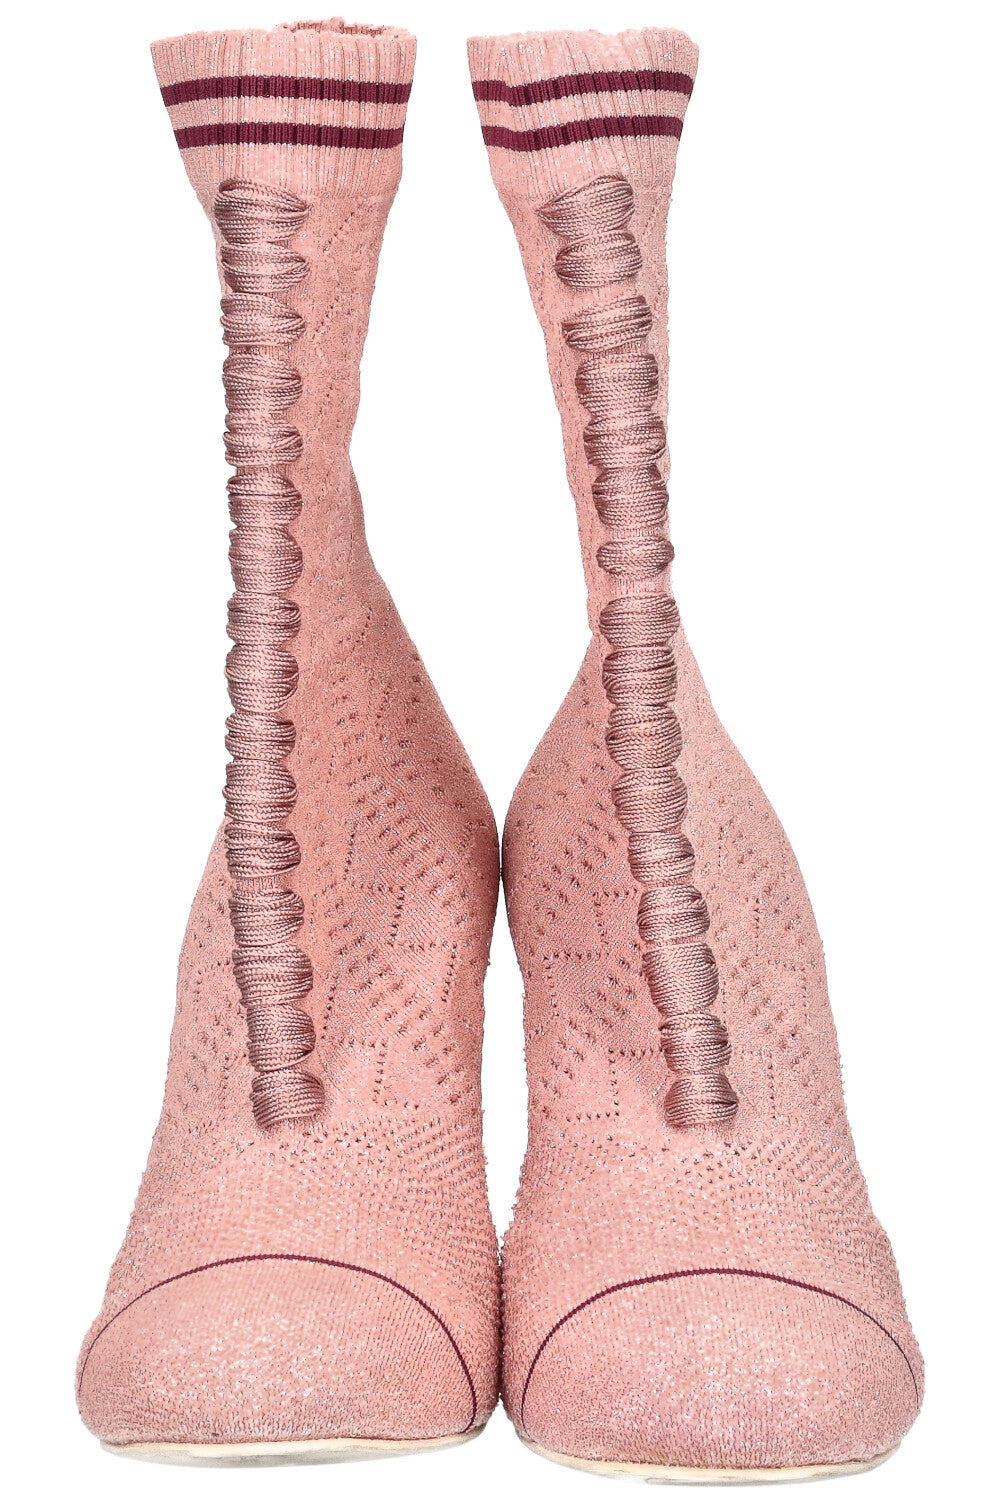 FENDI Heels Boots Stretch Fabric Glitter Pink